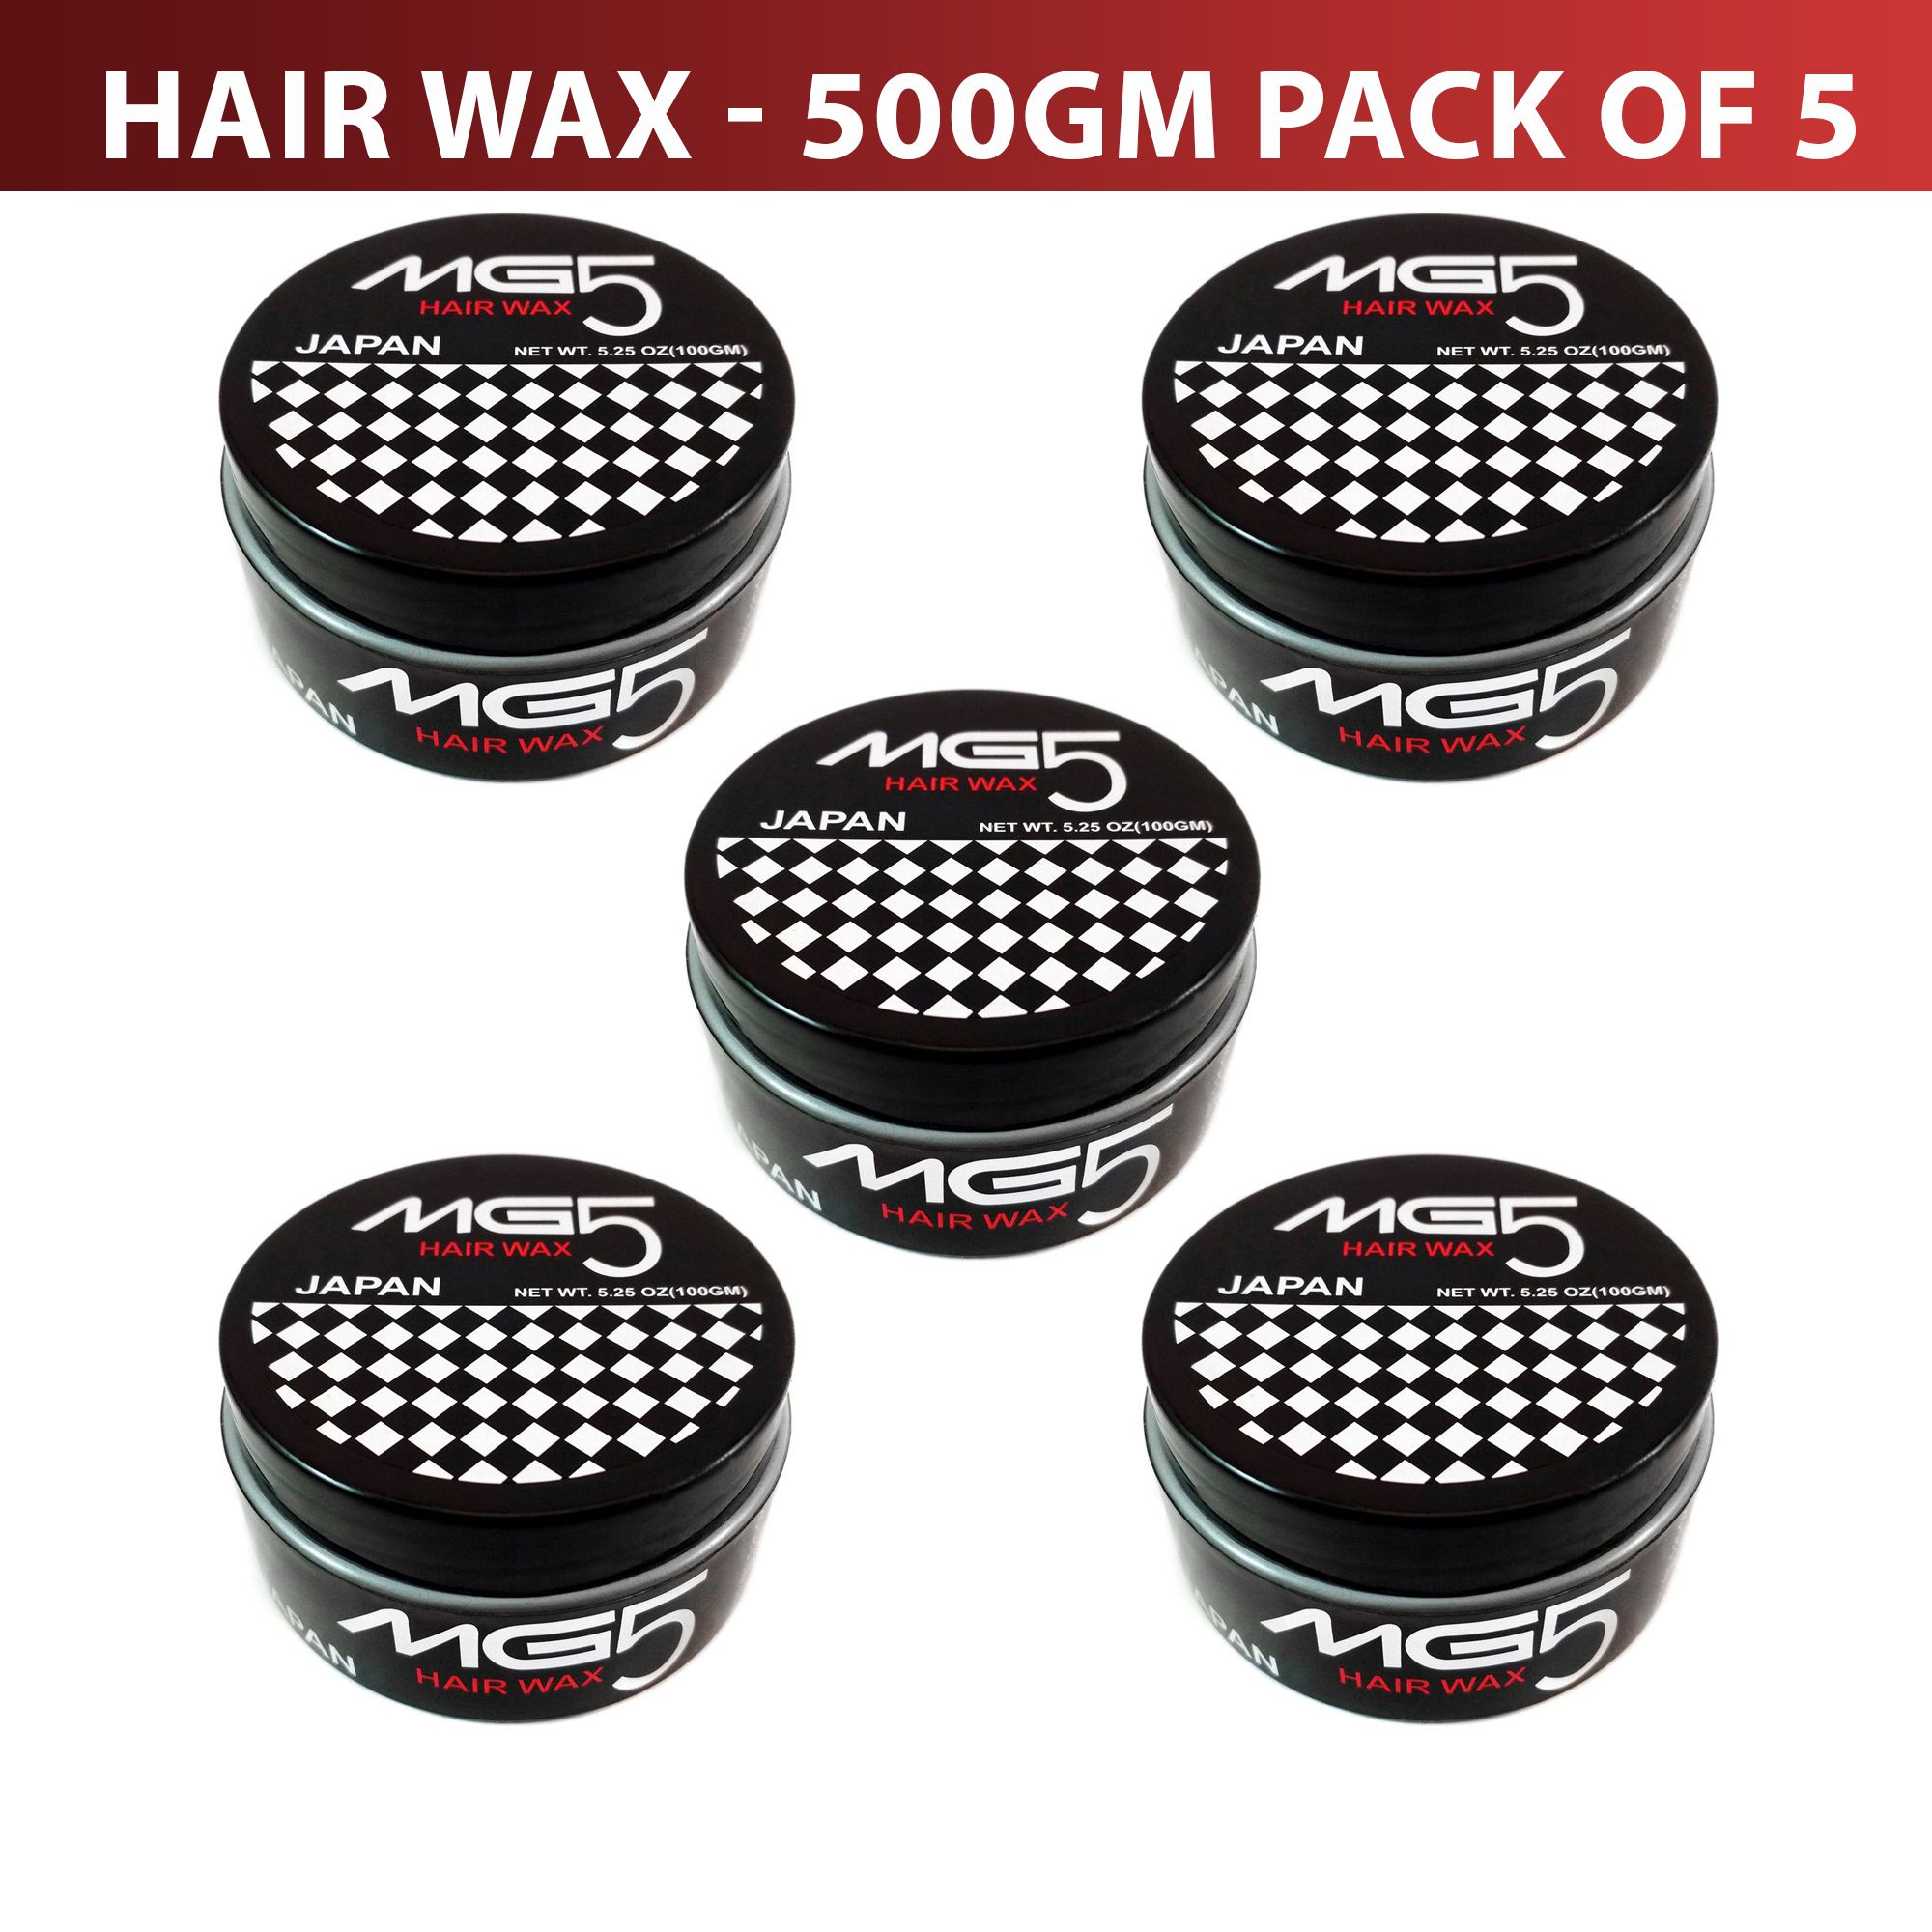     			mg5 hair wax Super Hold Wax 500 gm Pack of 5